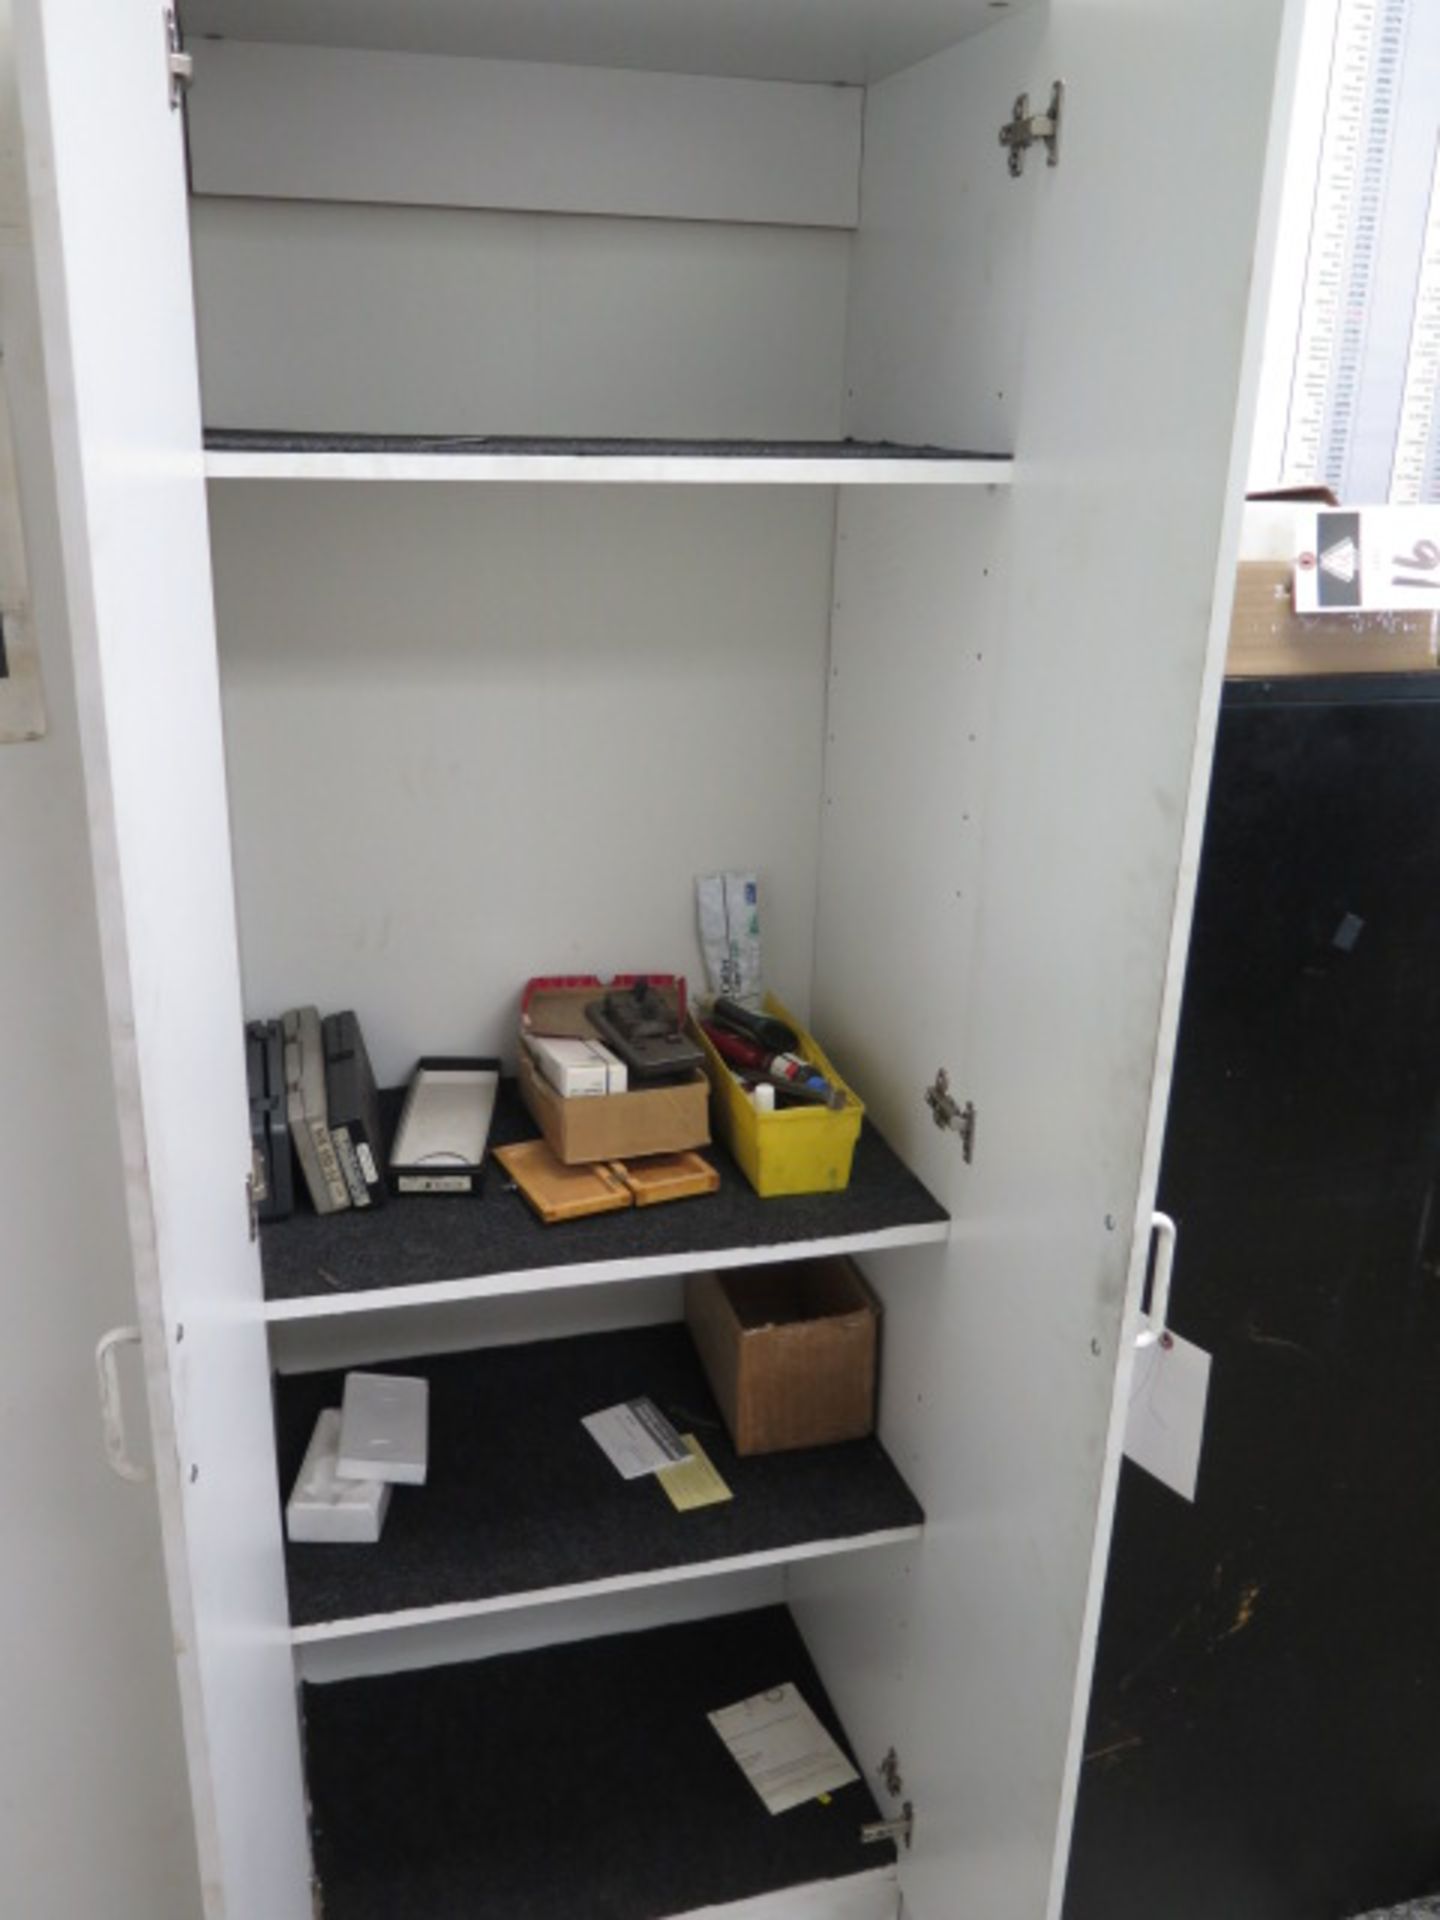 Storage Cabinets - Image 3 of 3